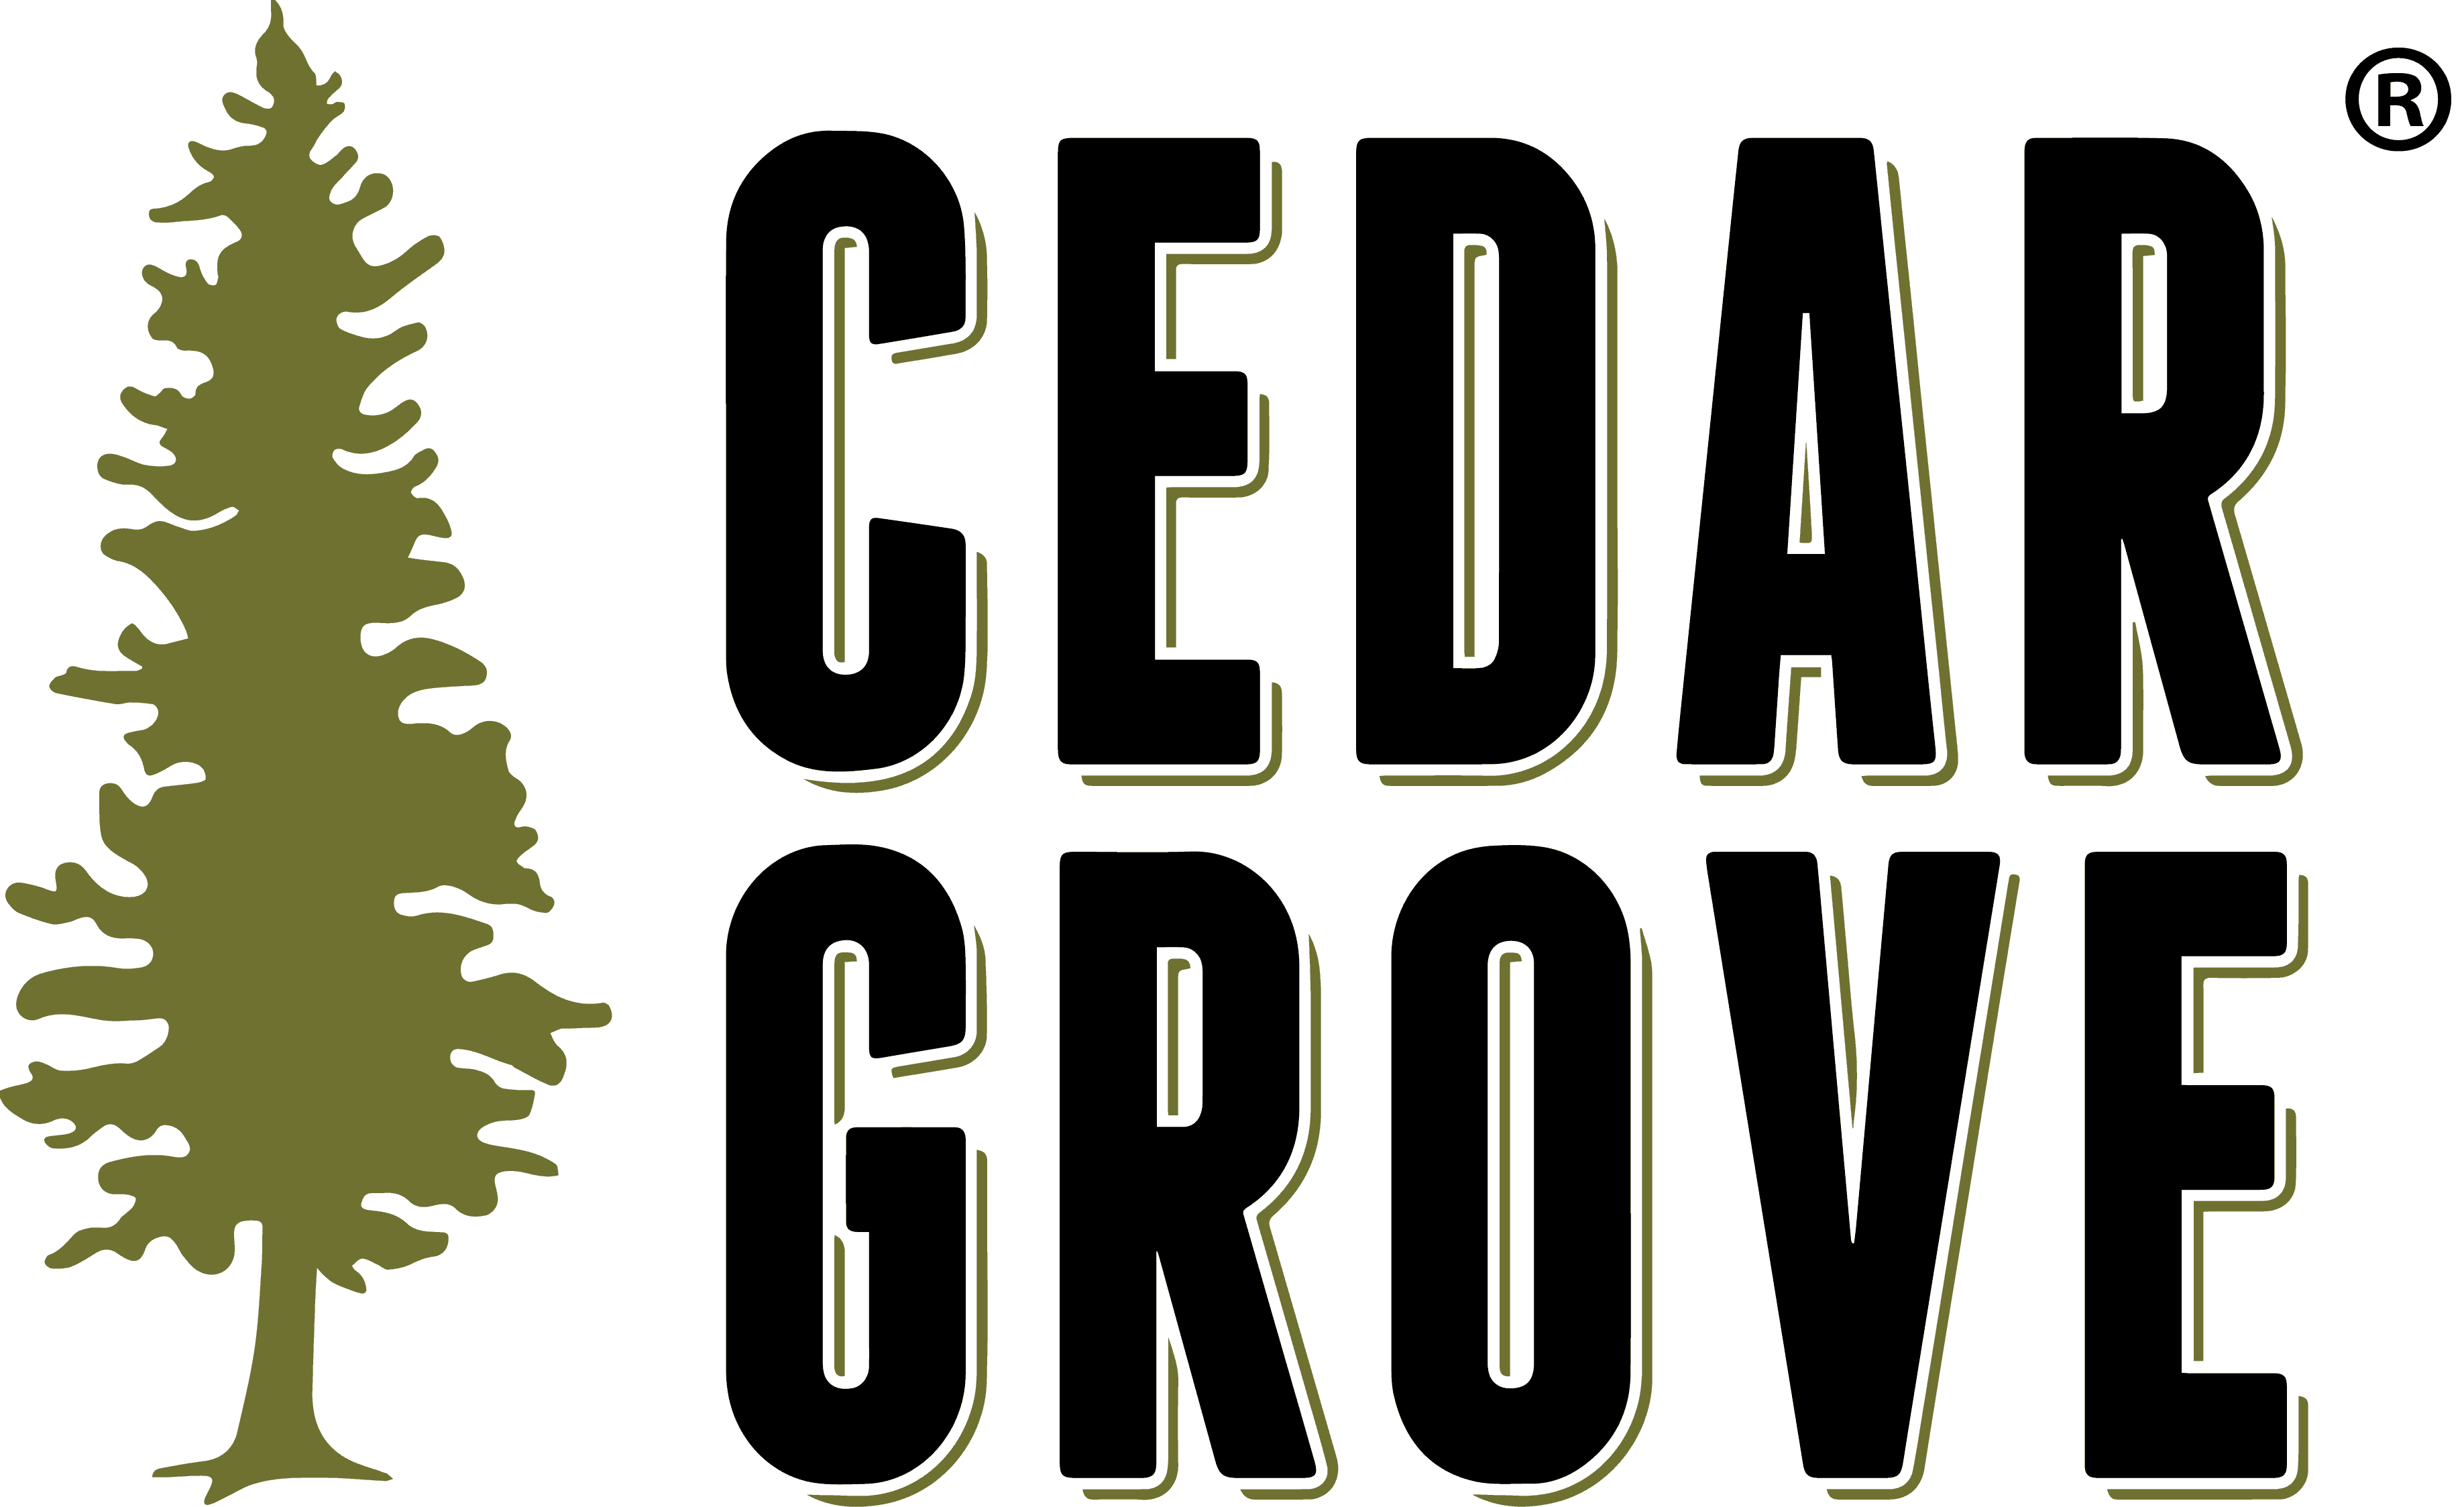 Cedar Grove